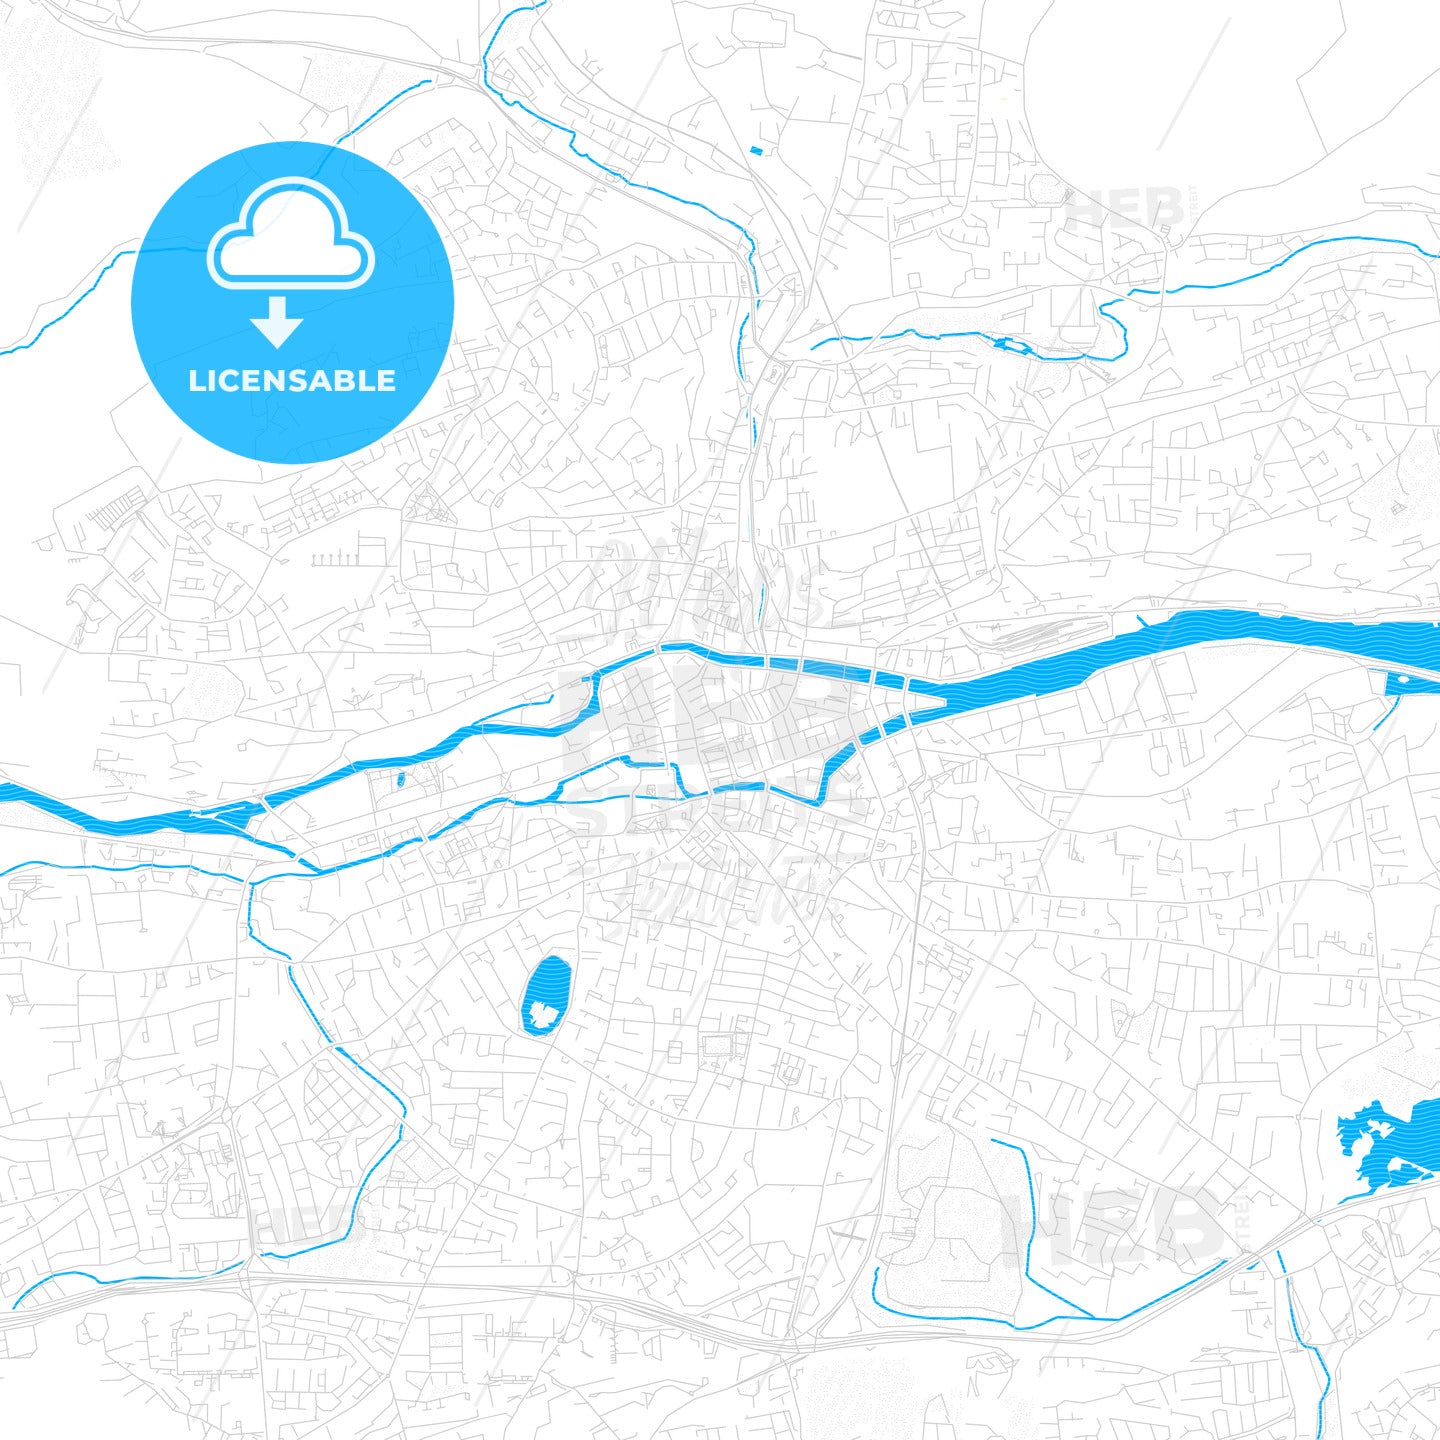 Cork, Ireland PDF vector map with water in focus